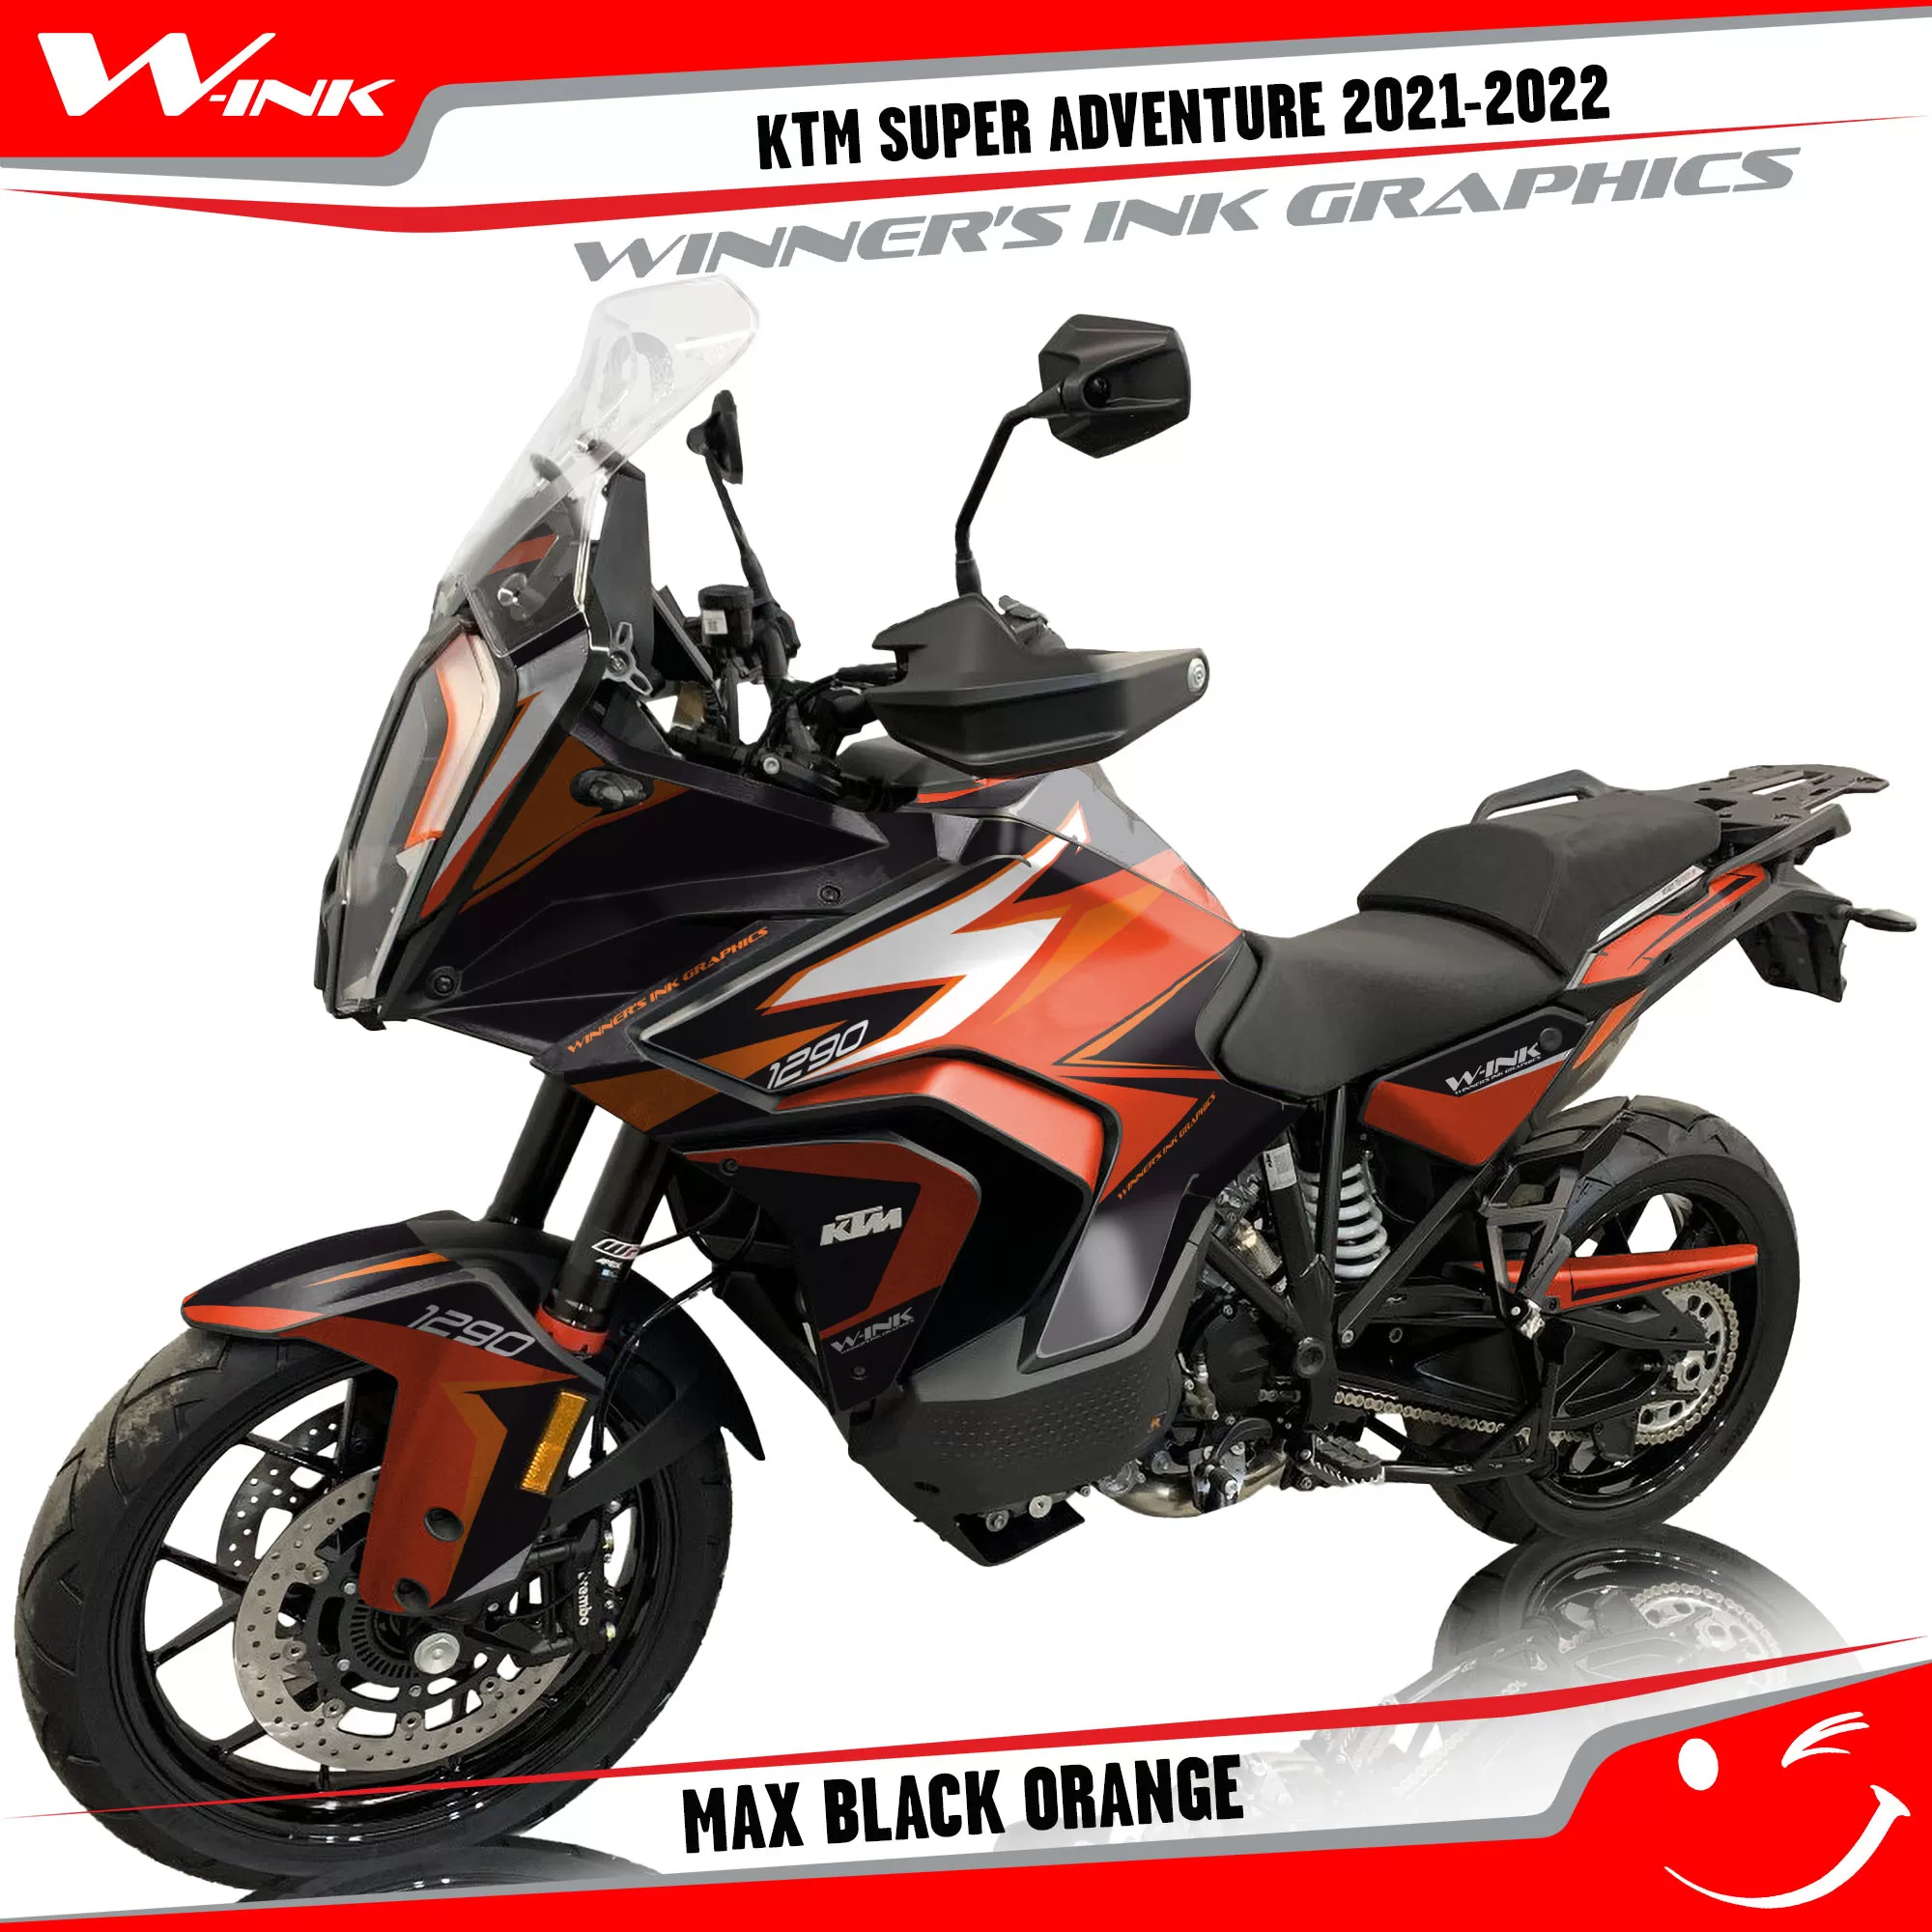 KTM-Super-Adventure-S-2021-2022-graphics-kit-and-decals-with-designs-Max-Black-Orange